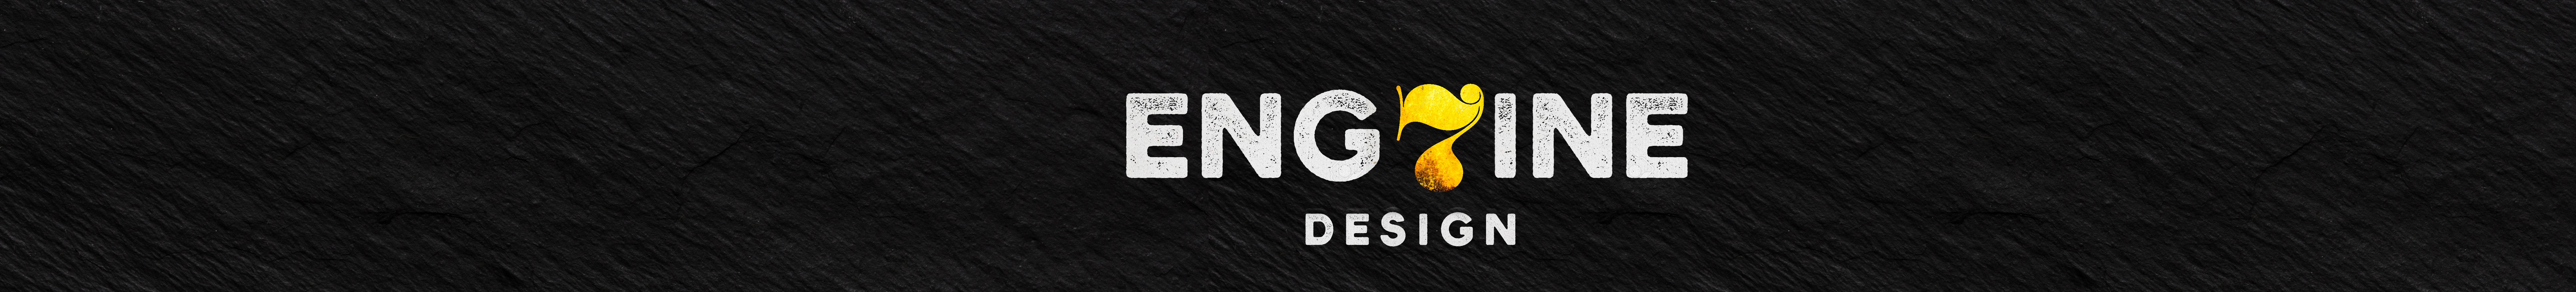 ENGINE 7 DESIGN's profile banner